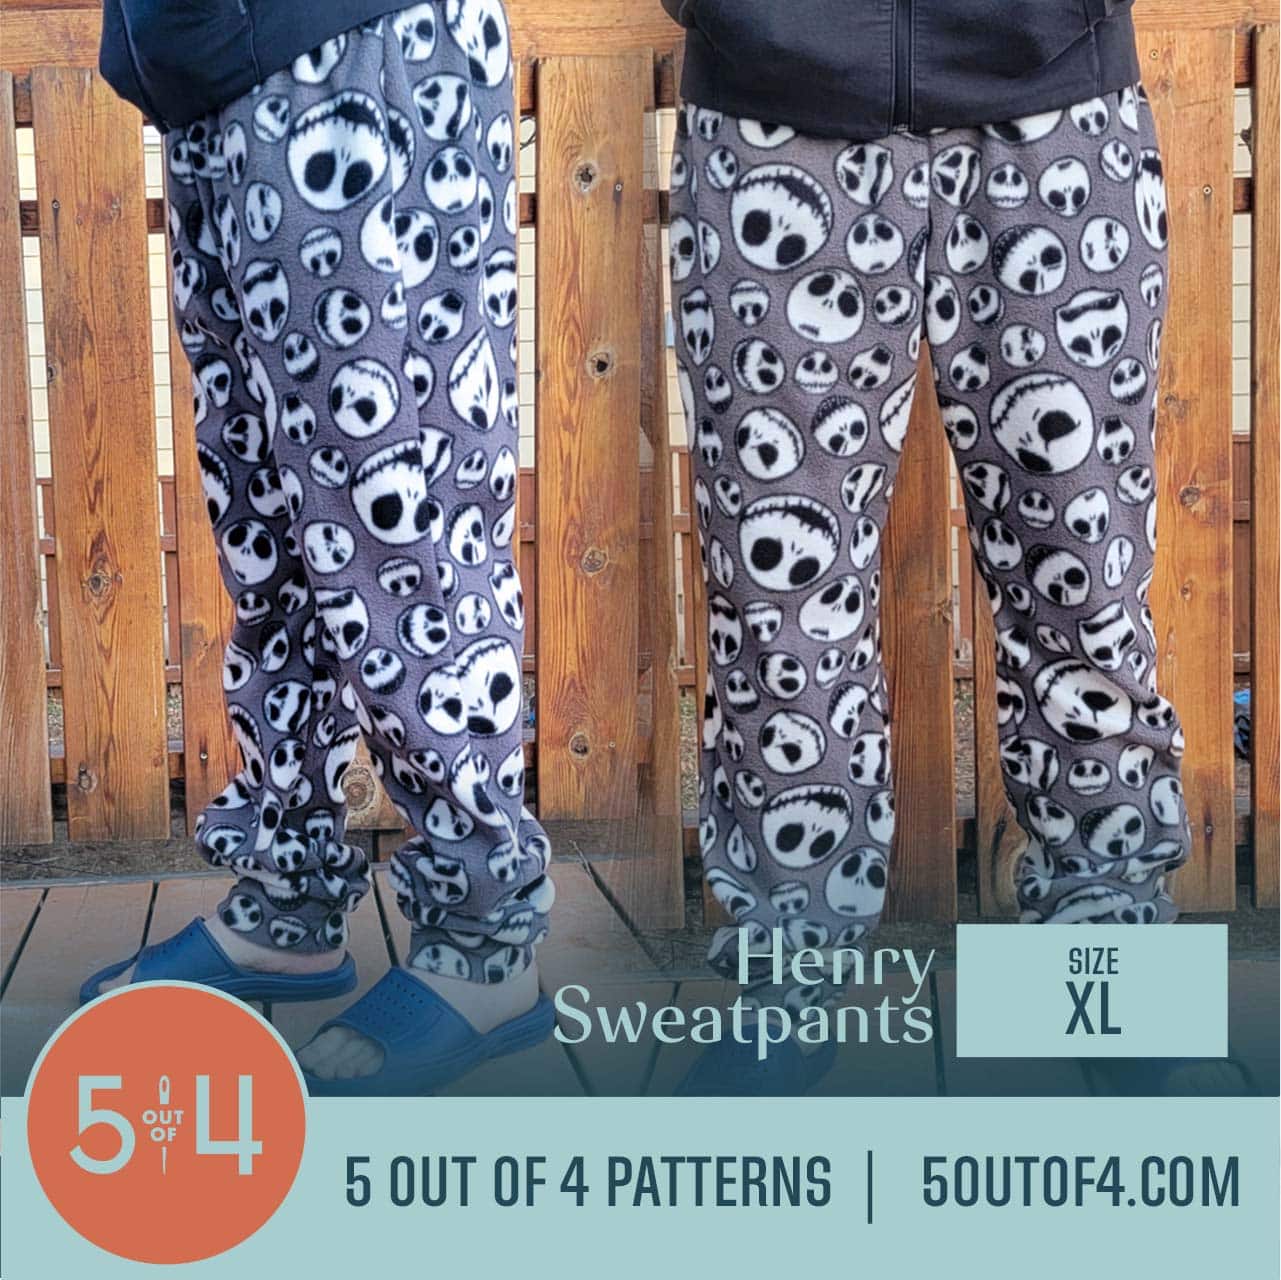 https://5outof4.com/wp-content/uploads/2022/01/5oo4-Henry-Sweatpants-size-XL-2.jpg